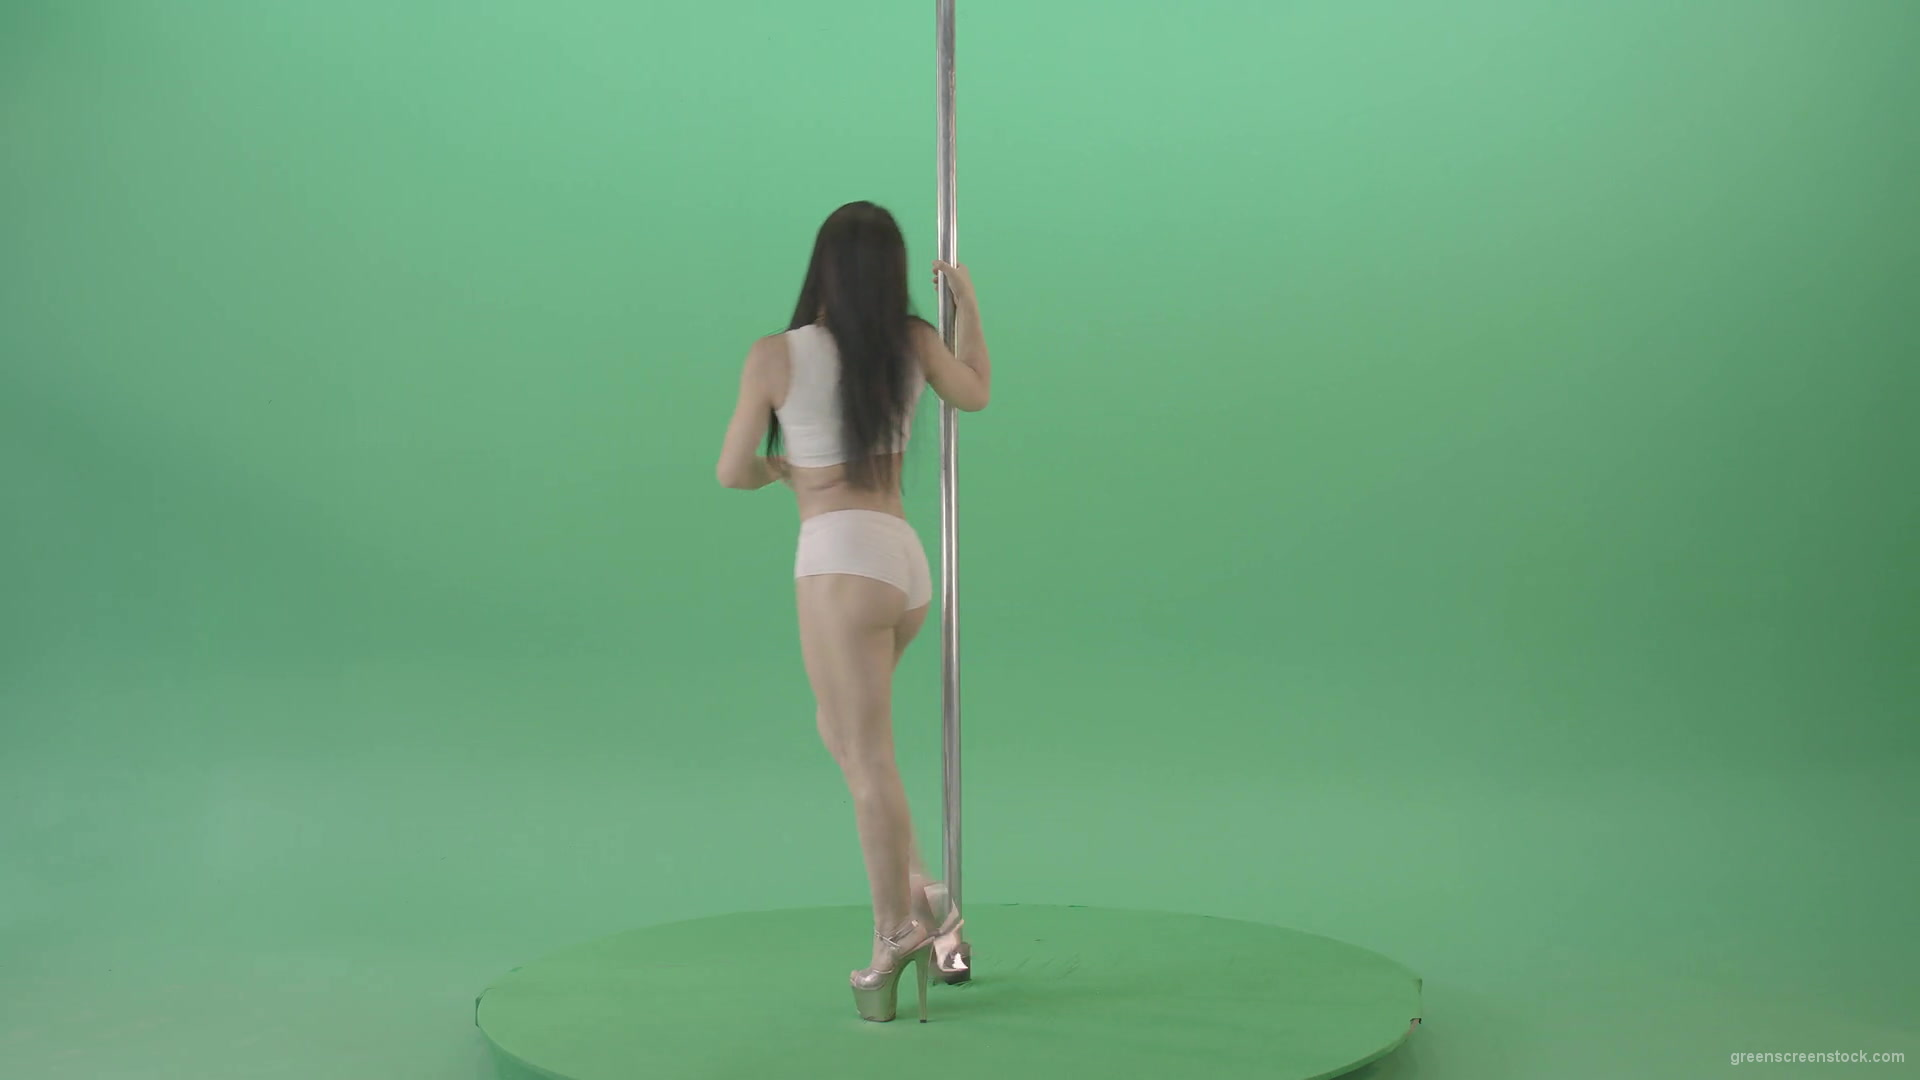 vj video background Dancing-GIrl-walking-arround-Pole-in-strip-white-underwear-on-green-screen-4K-Video-Footage-1920_003